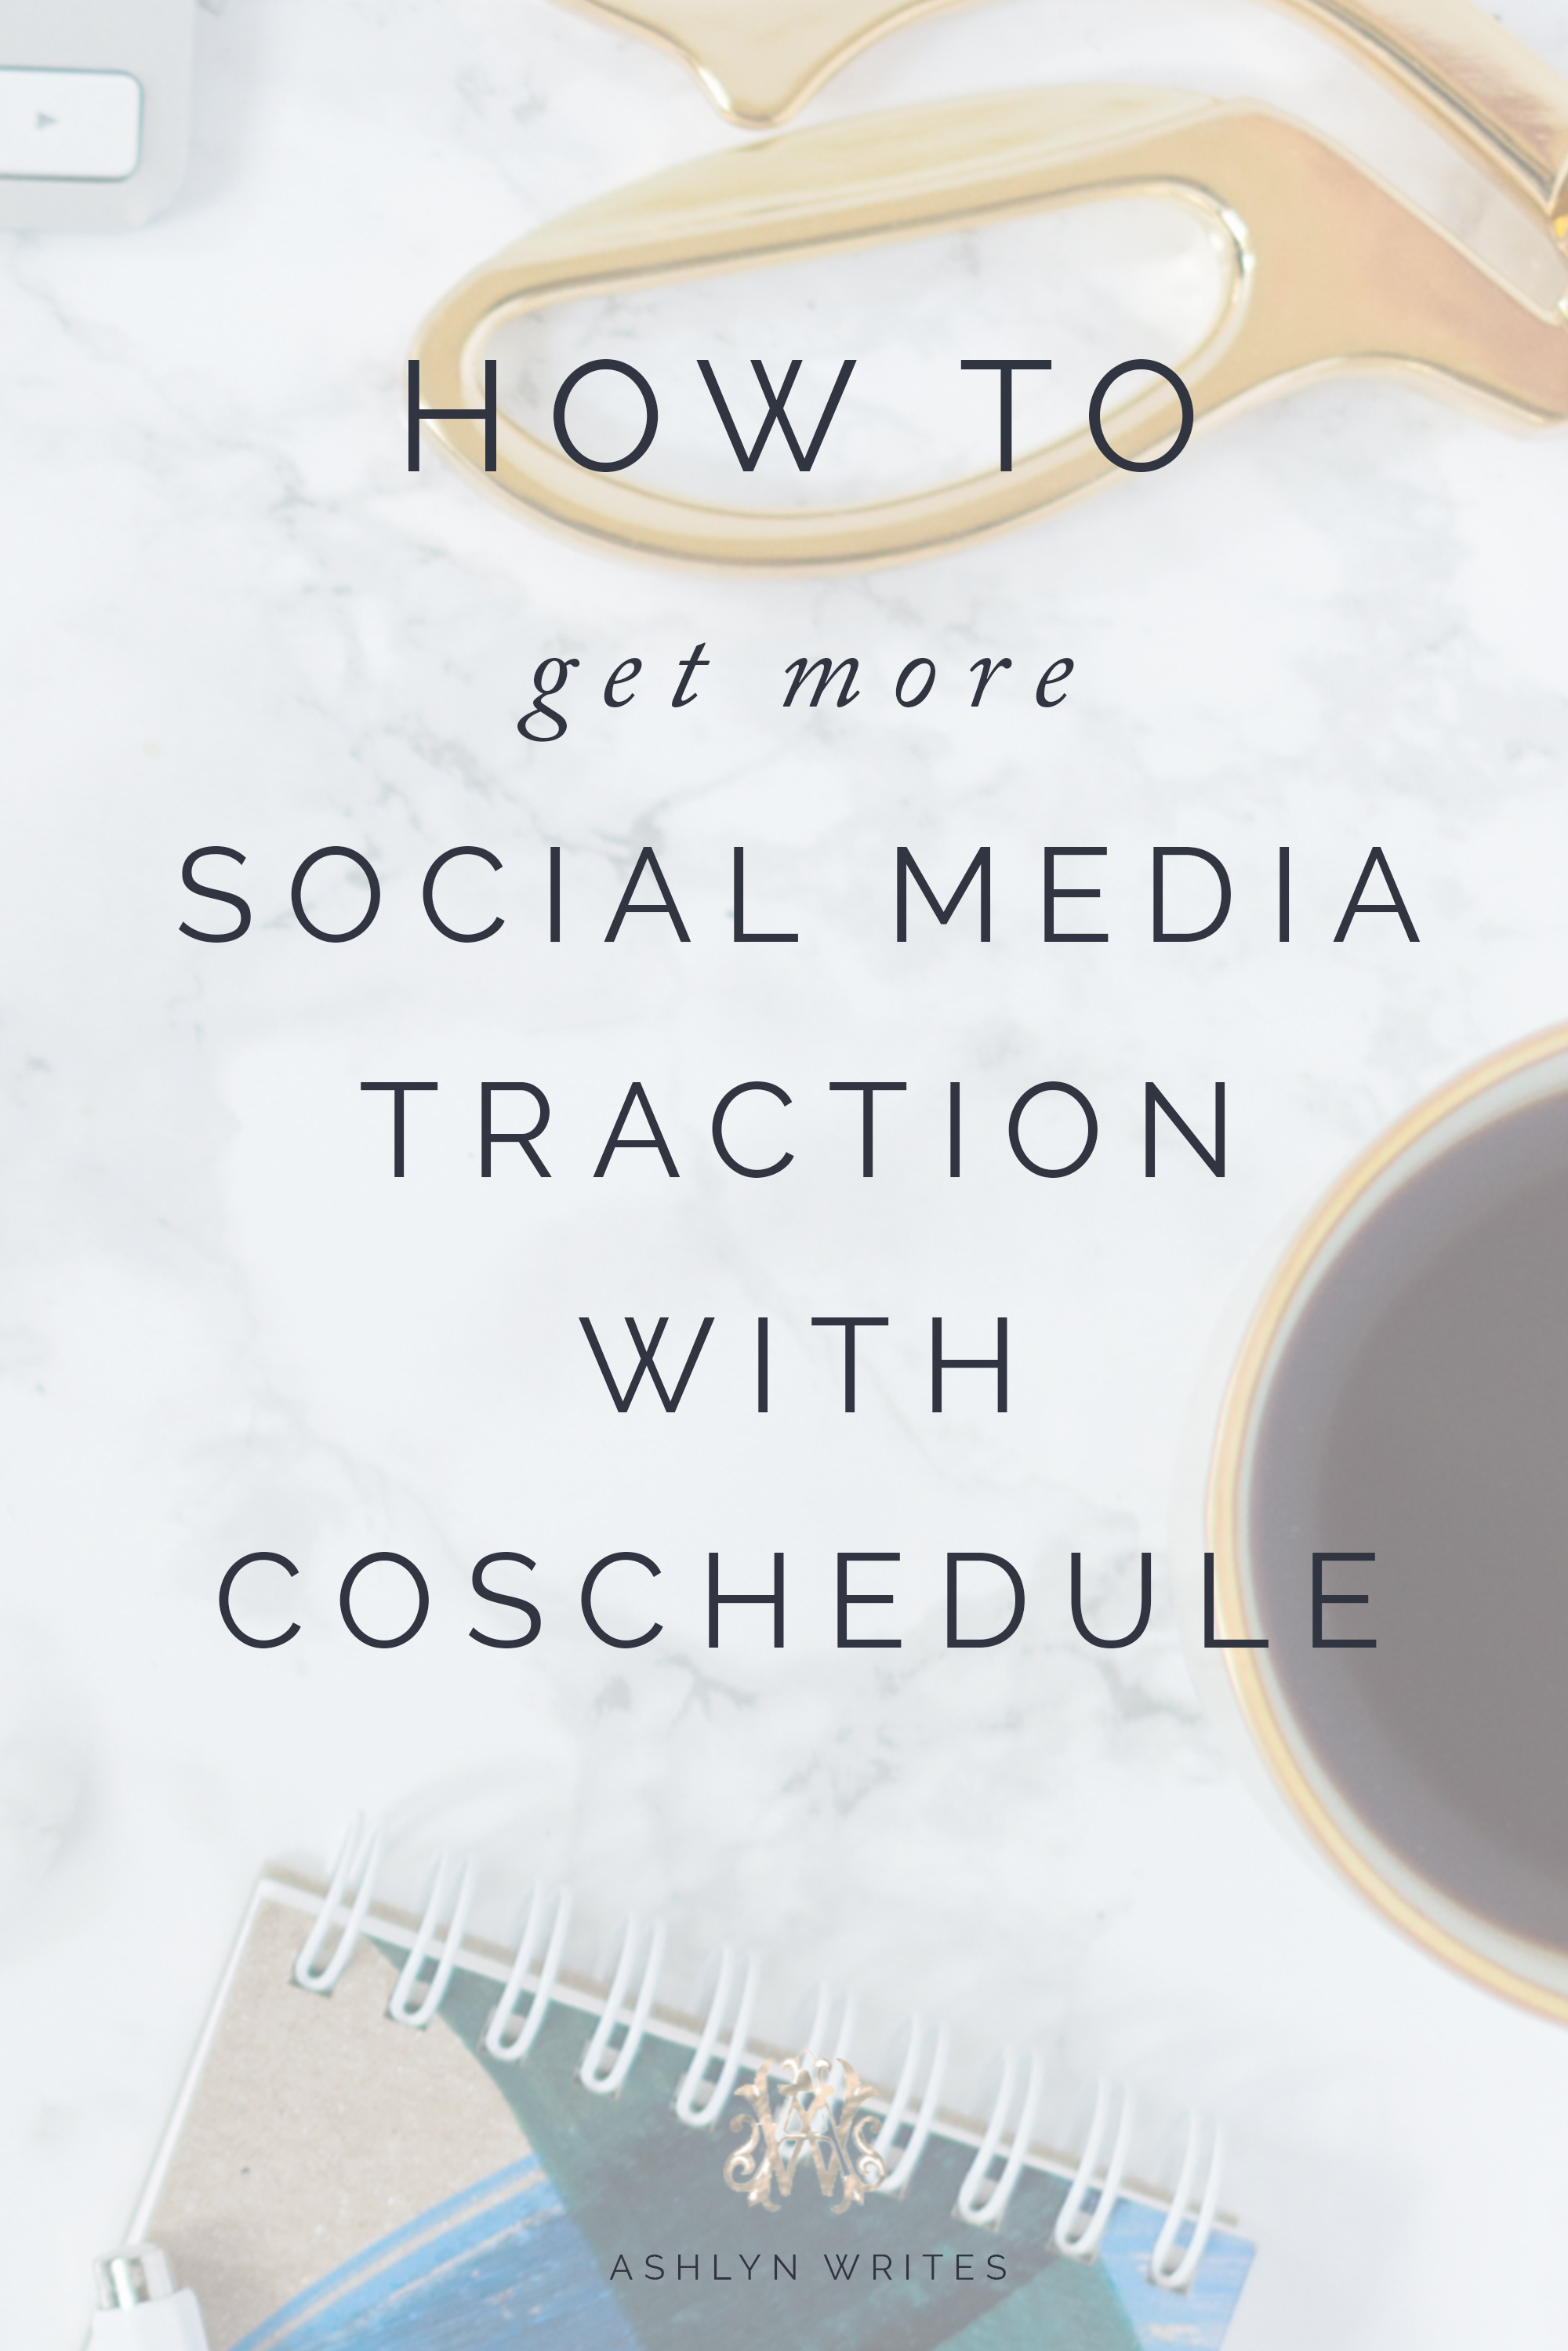 Coschedule social media tips